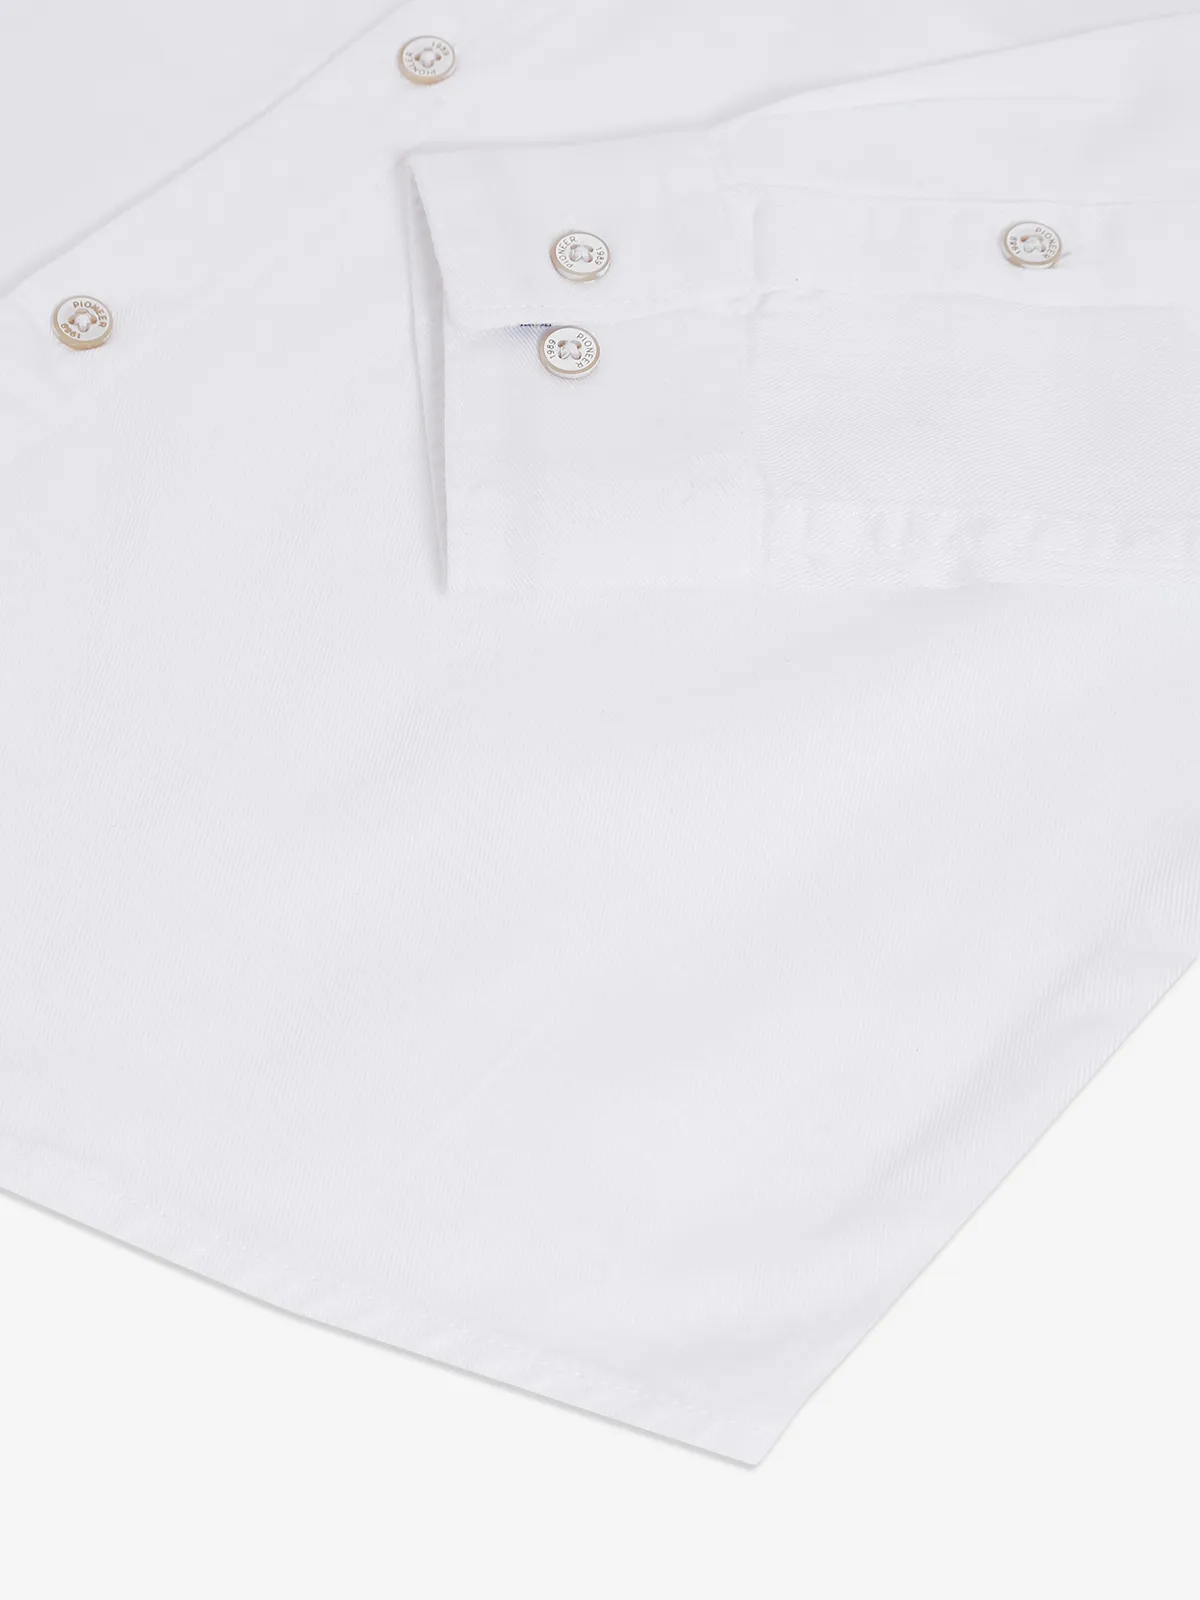 Pioneer white cotton plain shirt